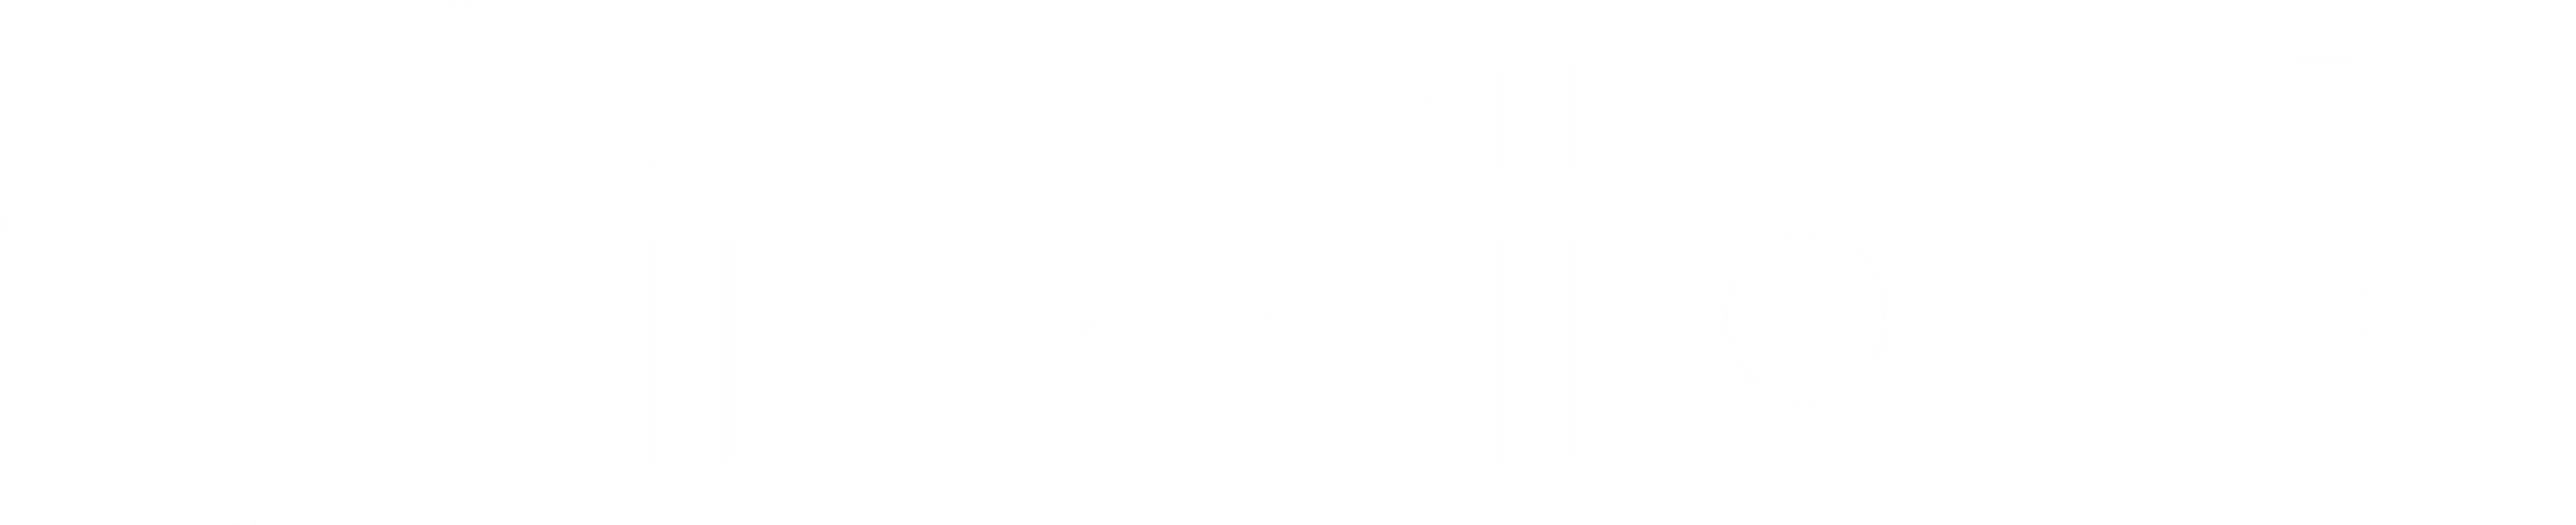 Fruitask logo white